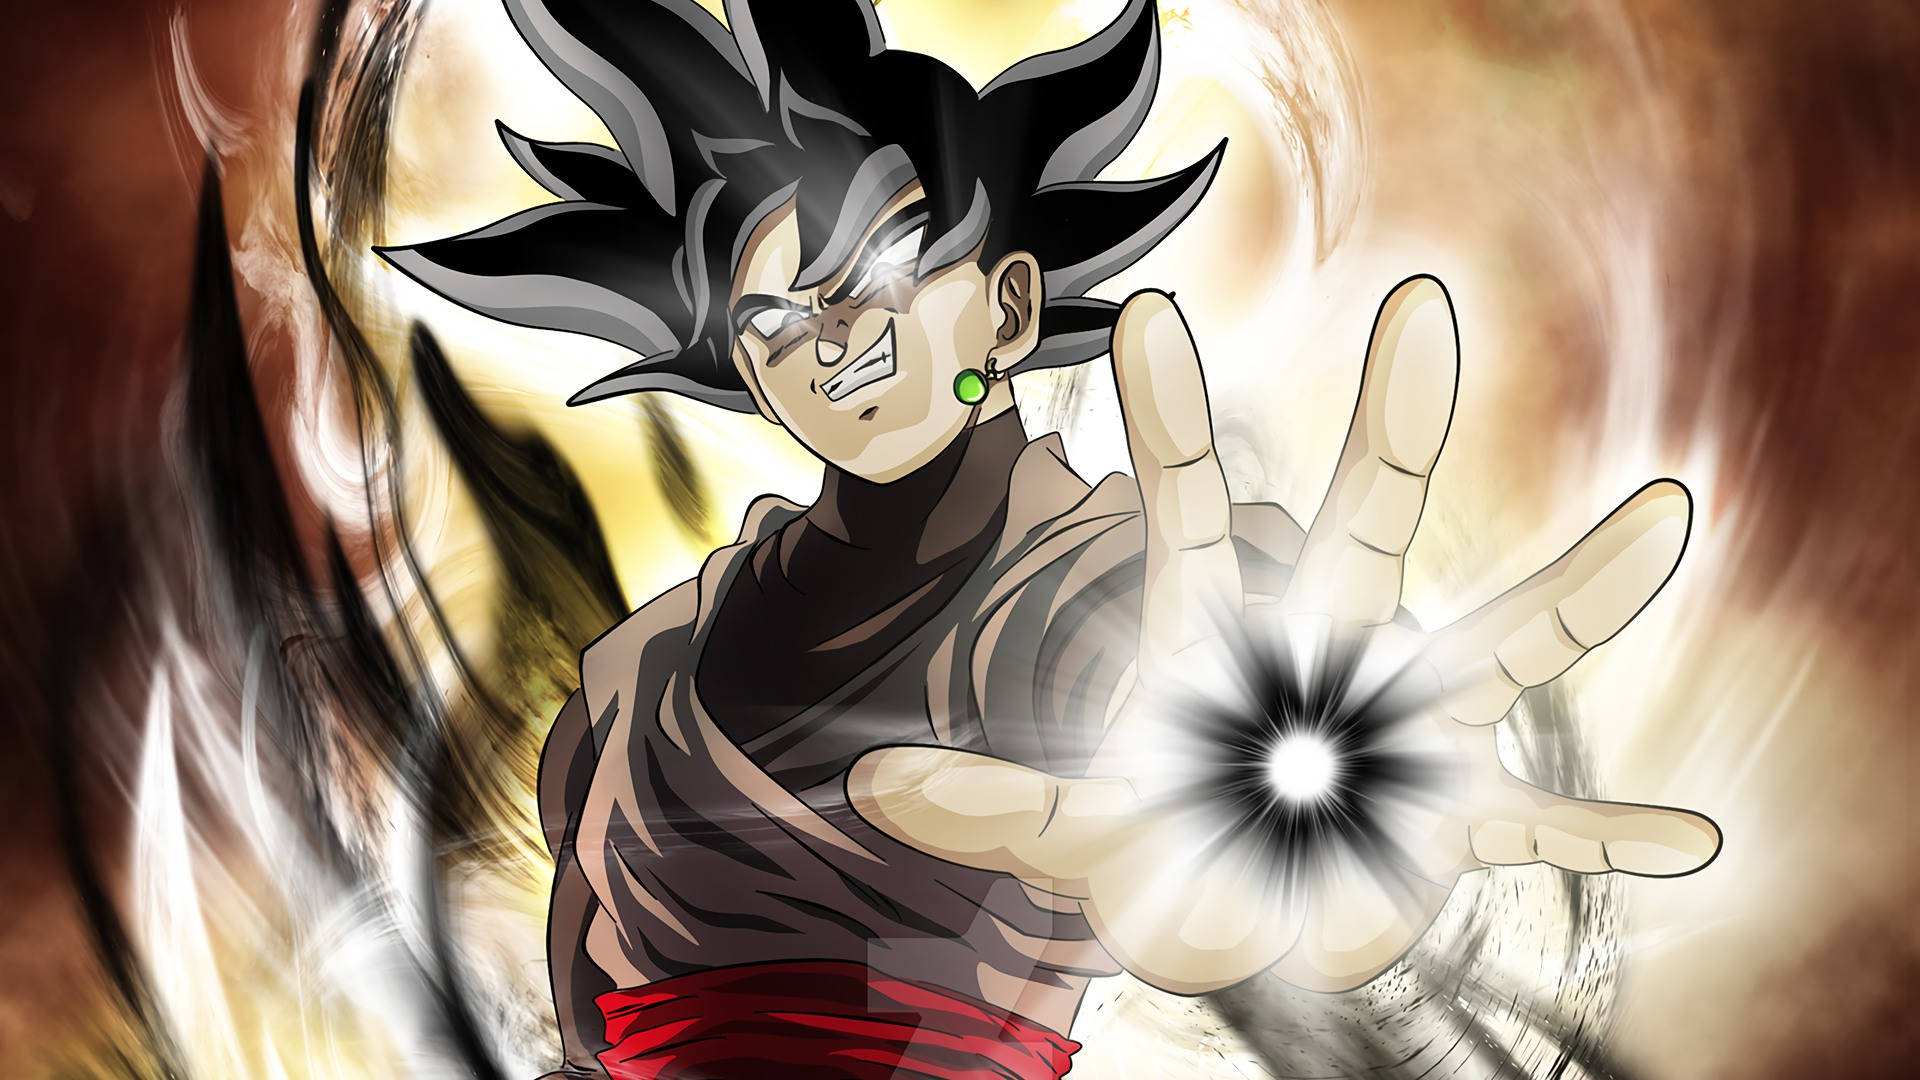 Mighty Goku Black - The Dark Saiyan, Displayed On An Iphone Screen Wallpaper